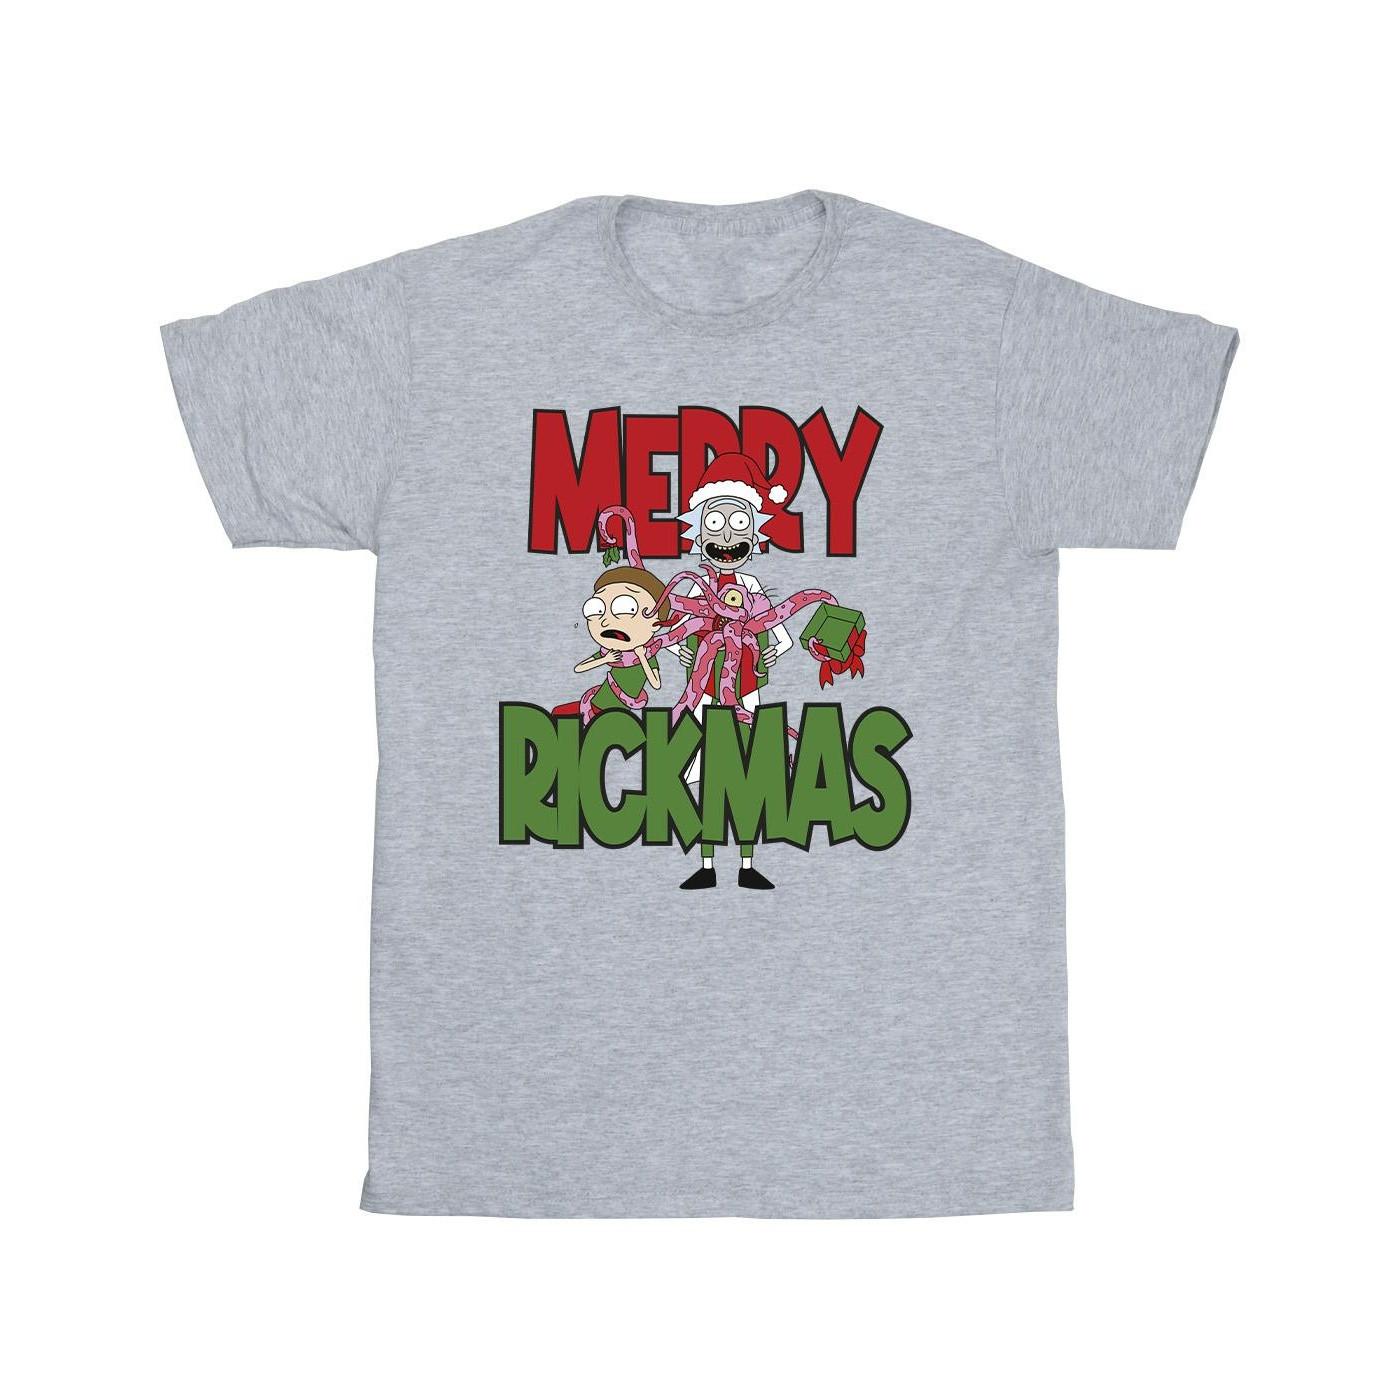 Merry Rickmas Tshirt Herren Grau XL von Rick And Morty